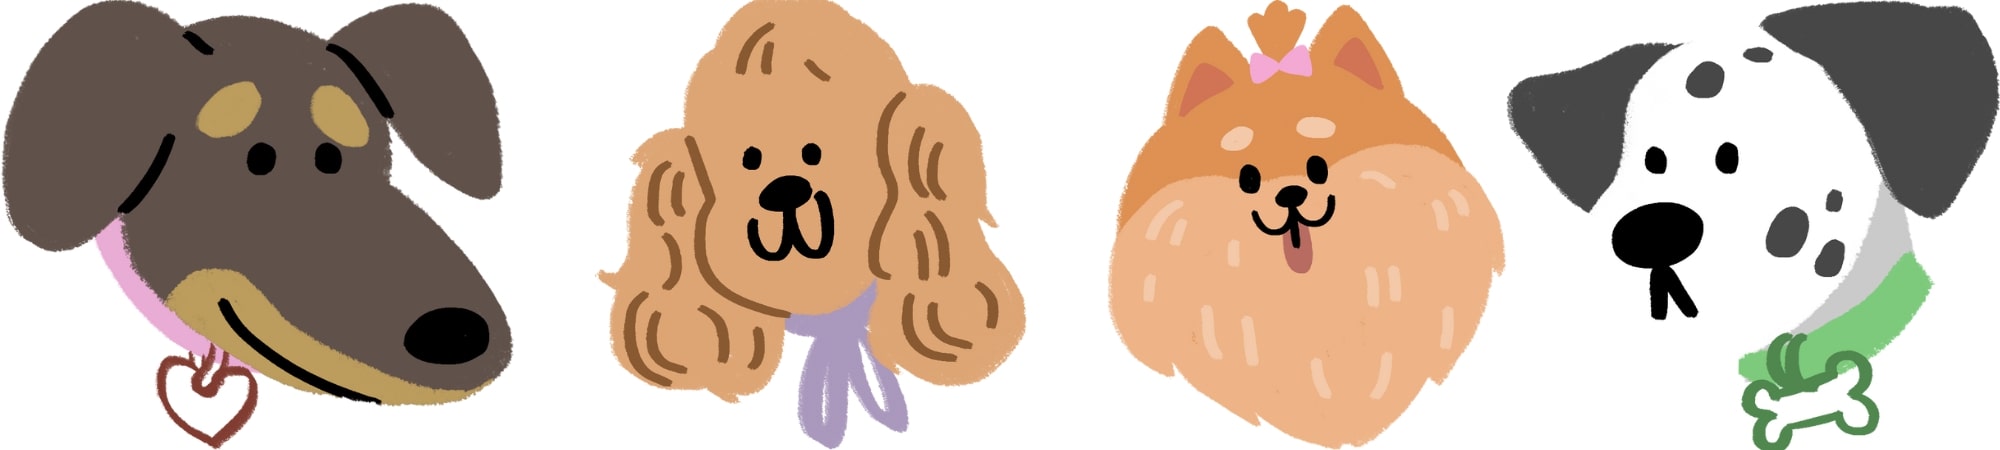 illustrations chiens